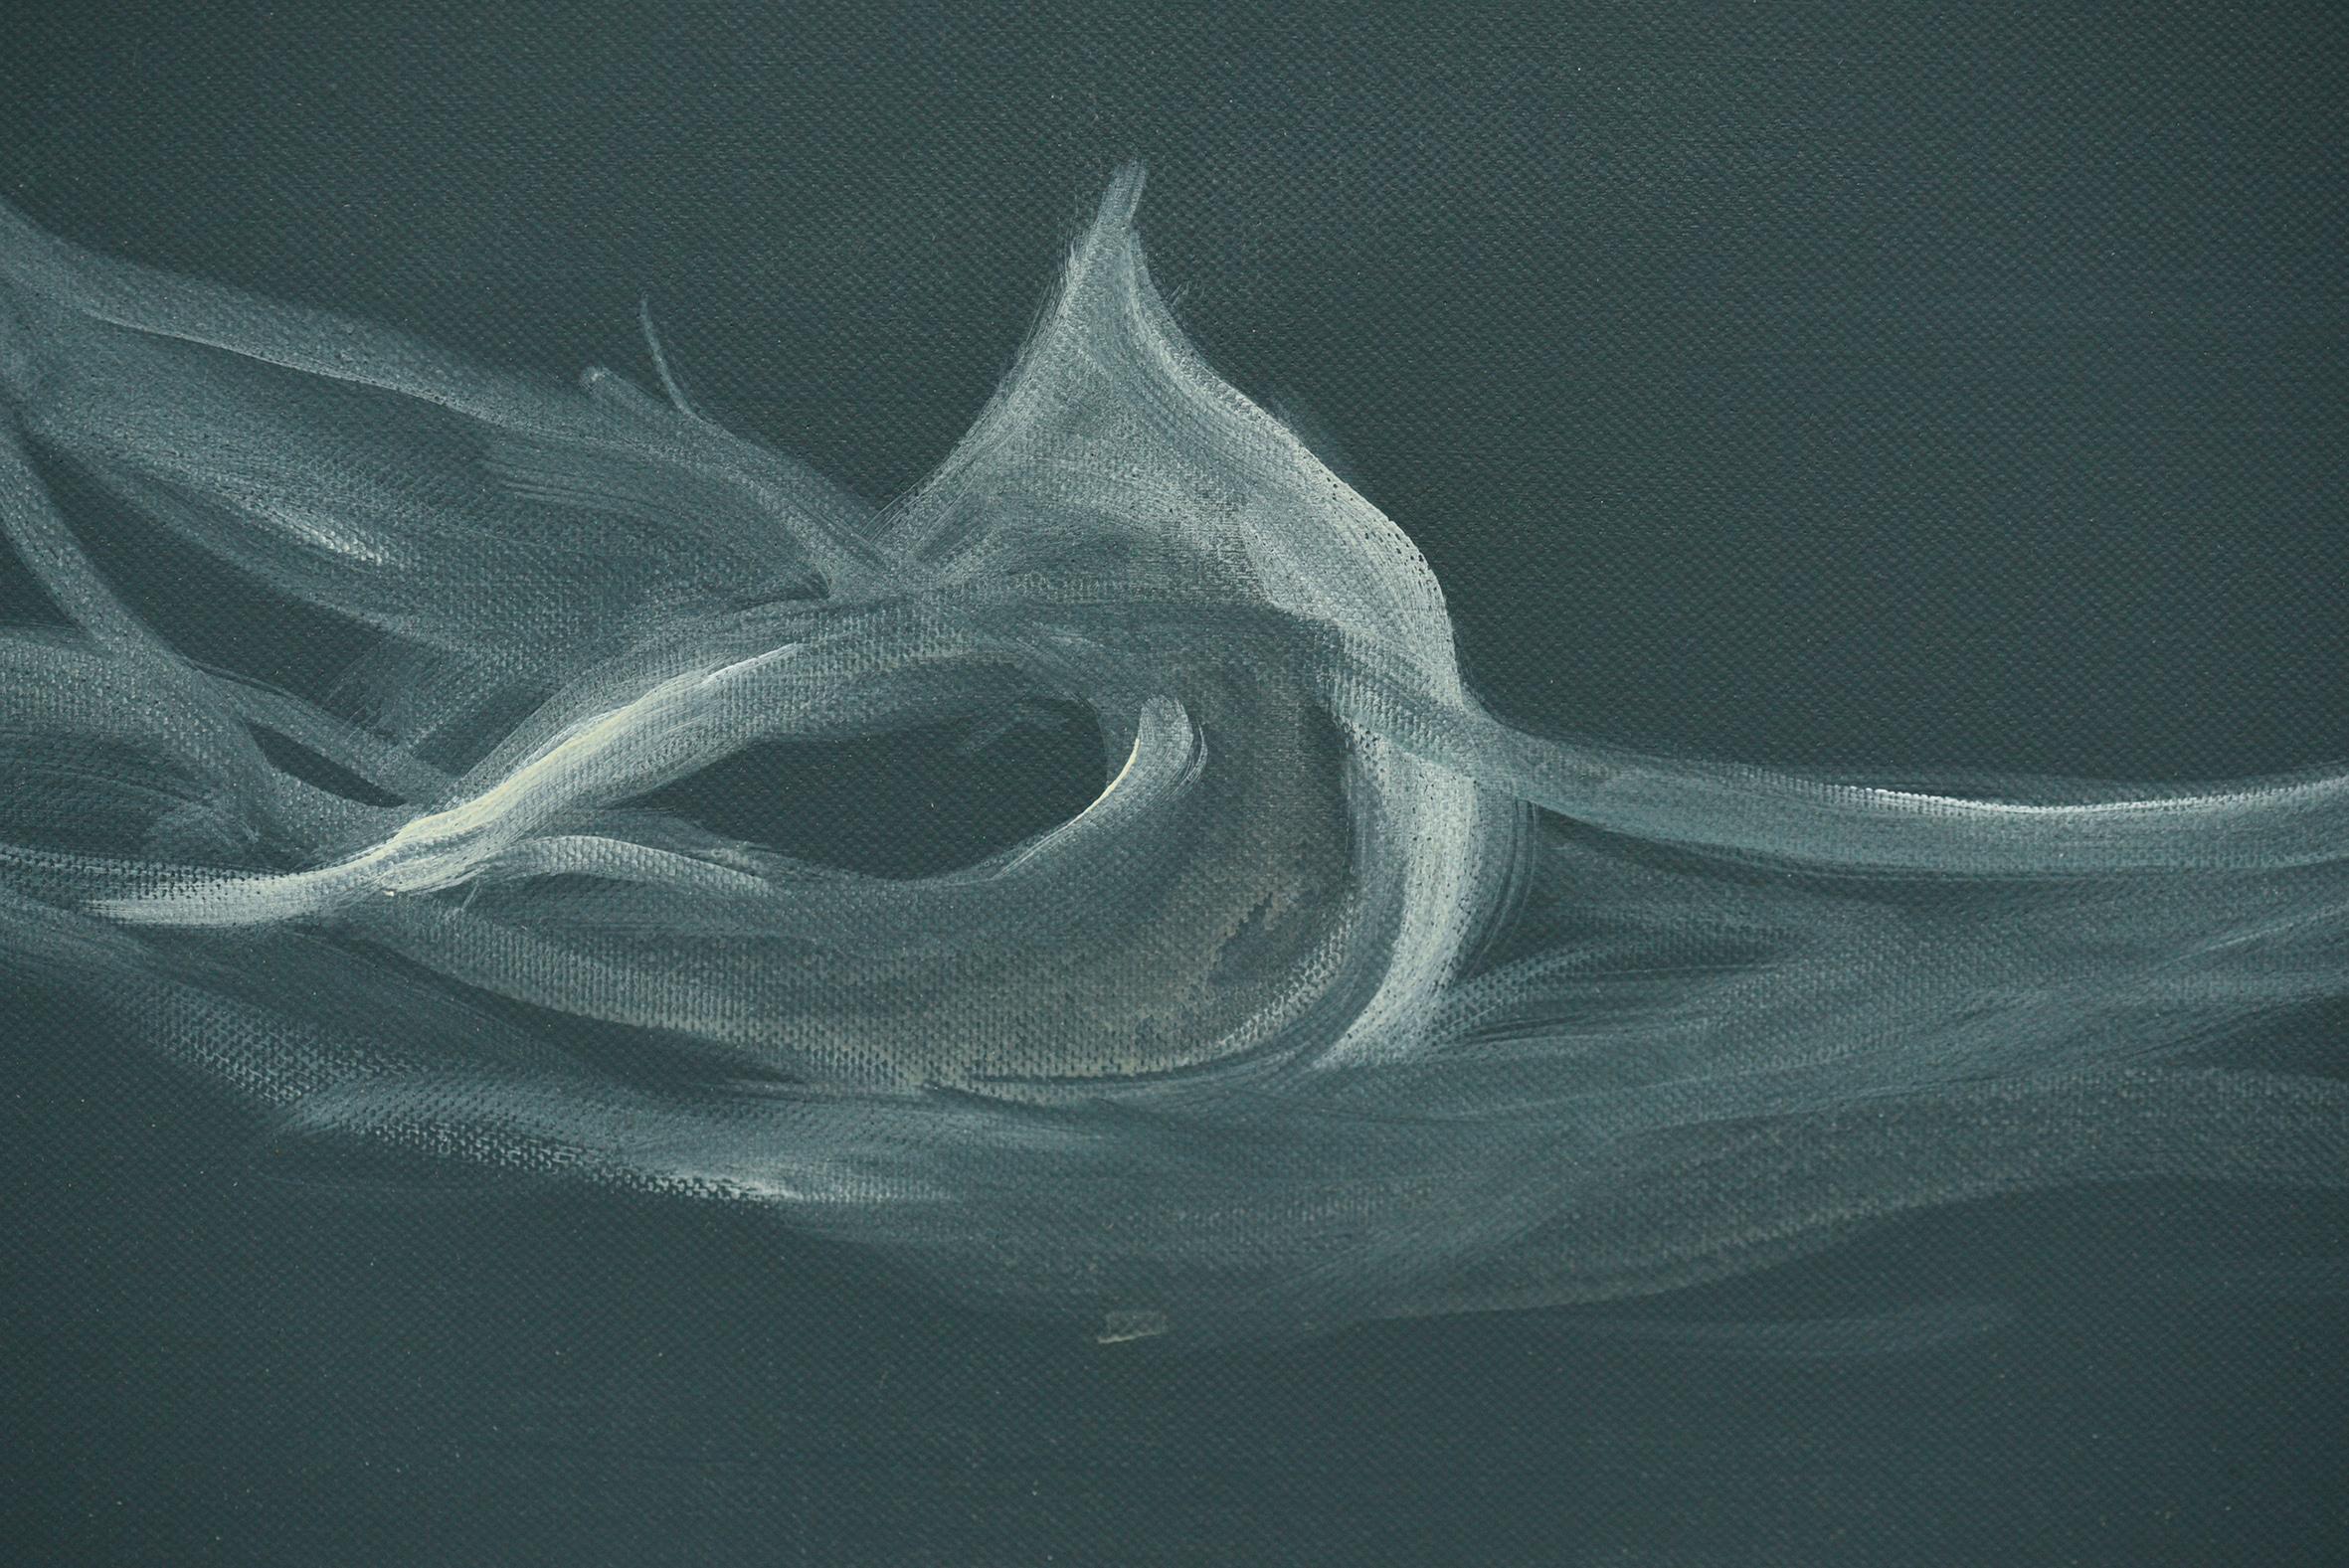 Stillness 1 - Minimalist, Oil on Canvas, 21st Century, Positiv Energy - Painting by Joanna Skurska